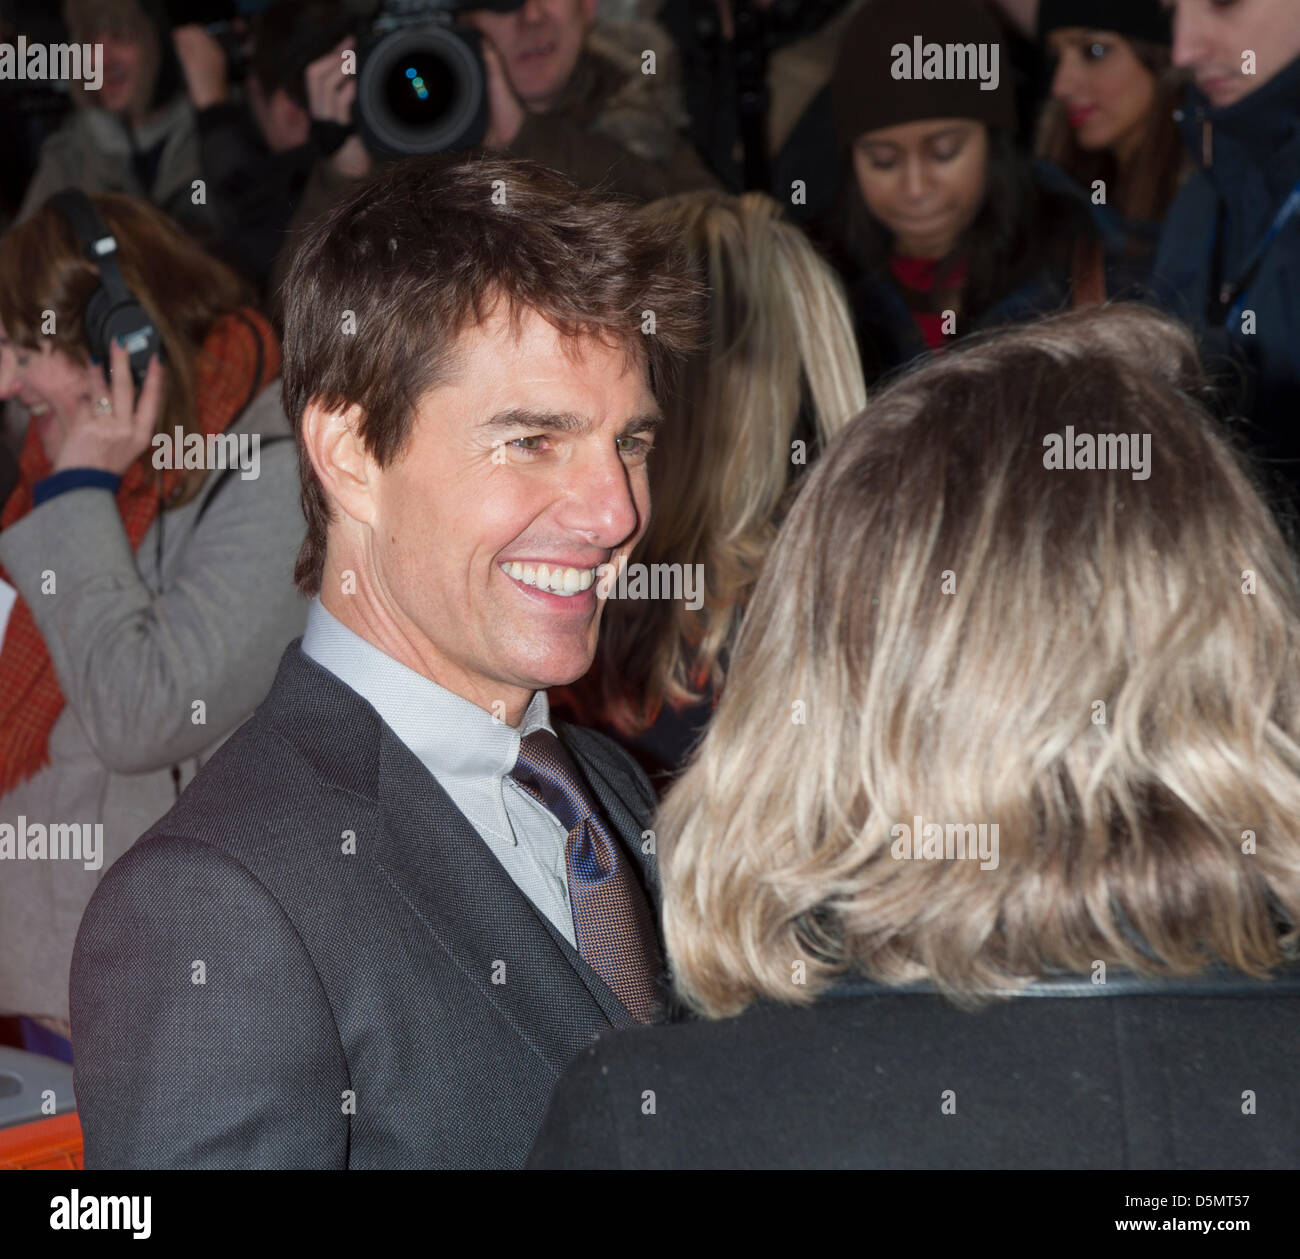 Londra BFi i max, 4 Apri 2013, Tom Cruise in Oblivion Uk Premiere BFi Imax, South Bank di Londra. Foto Stock